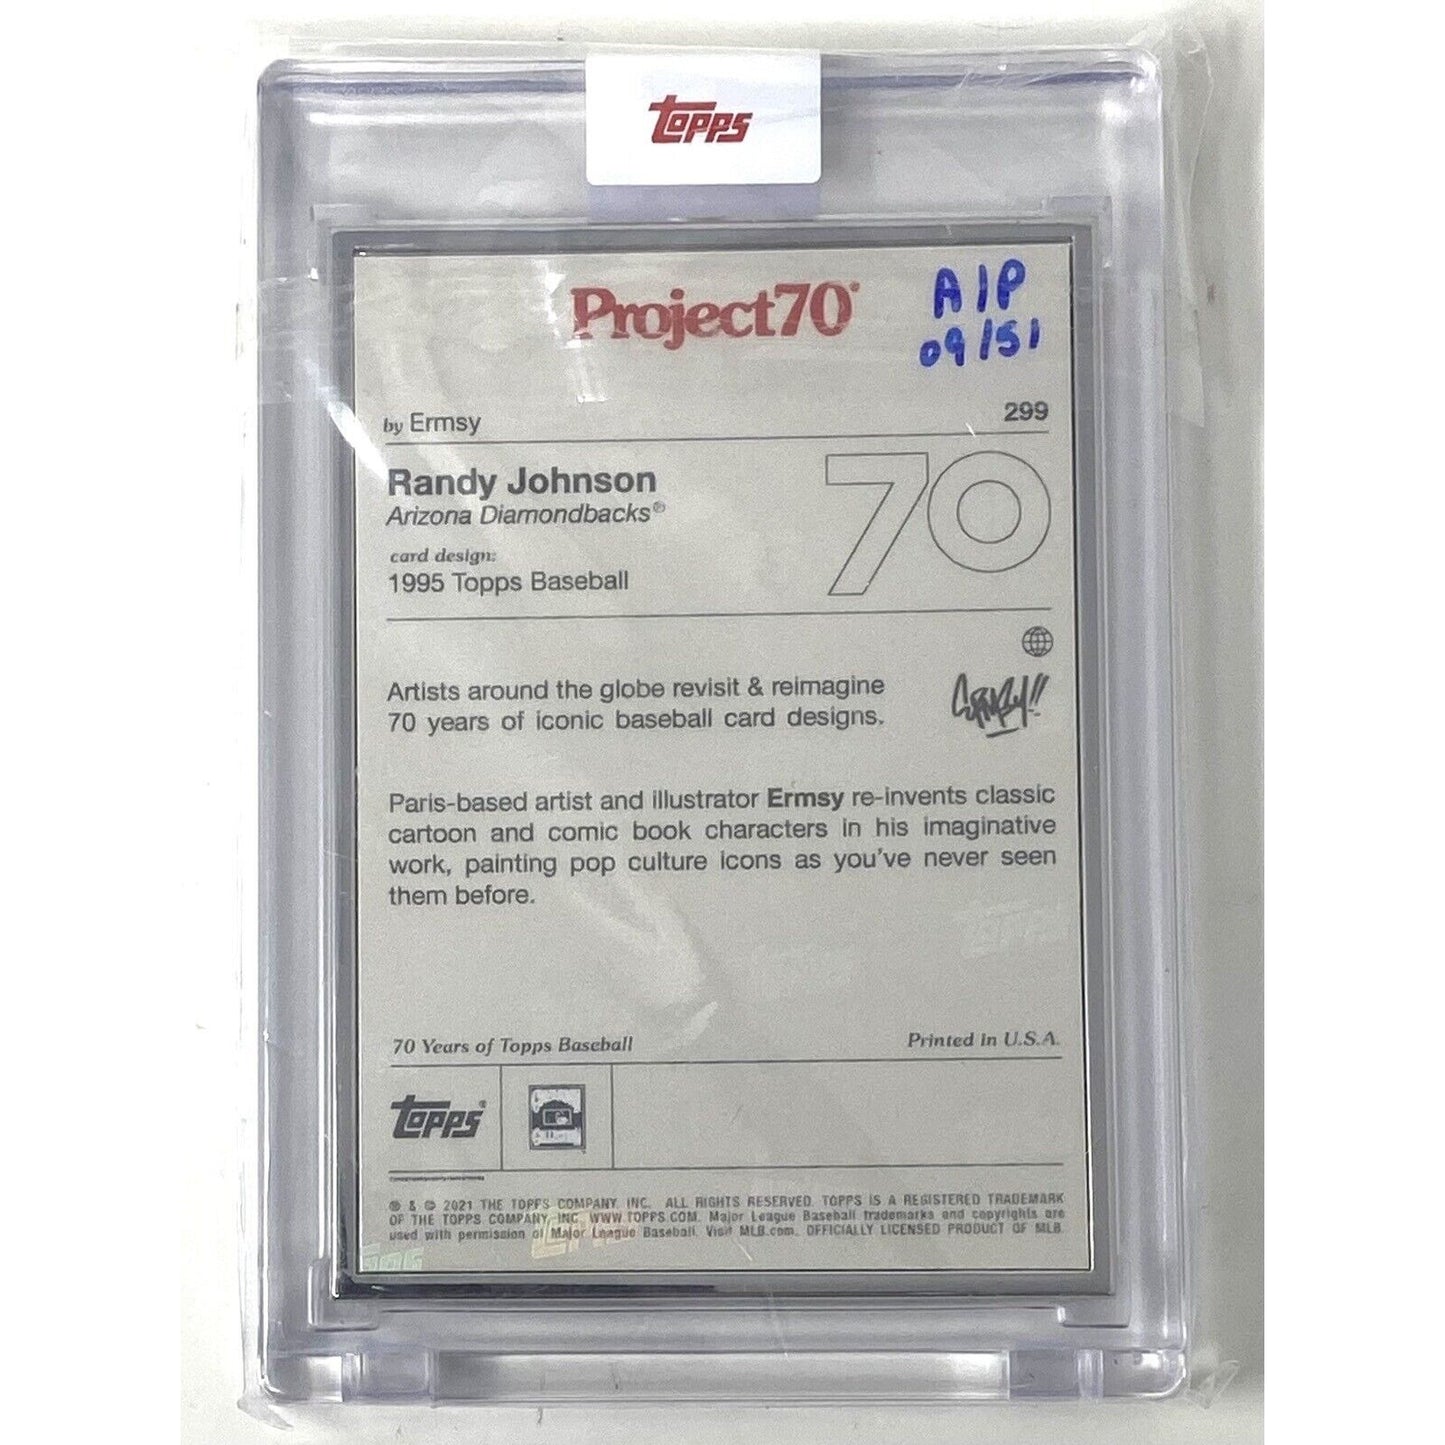 Topps Project 70 Ermsy #299 Randy Johnson Artist Proof AP /51 Card - POKEMON